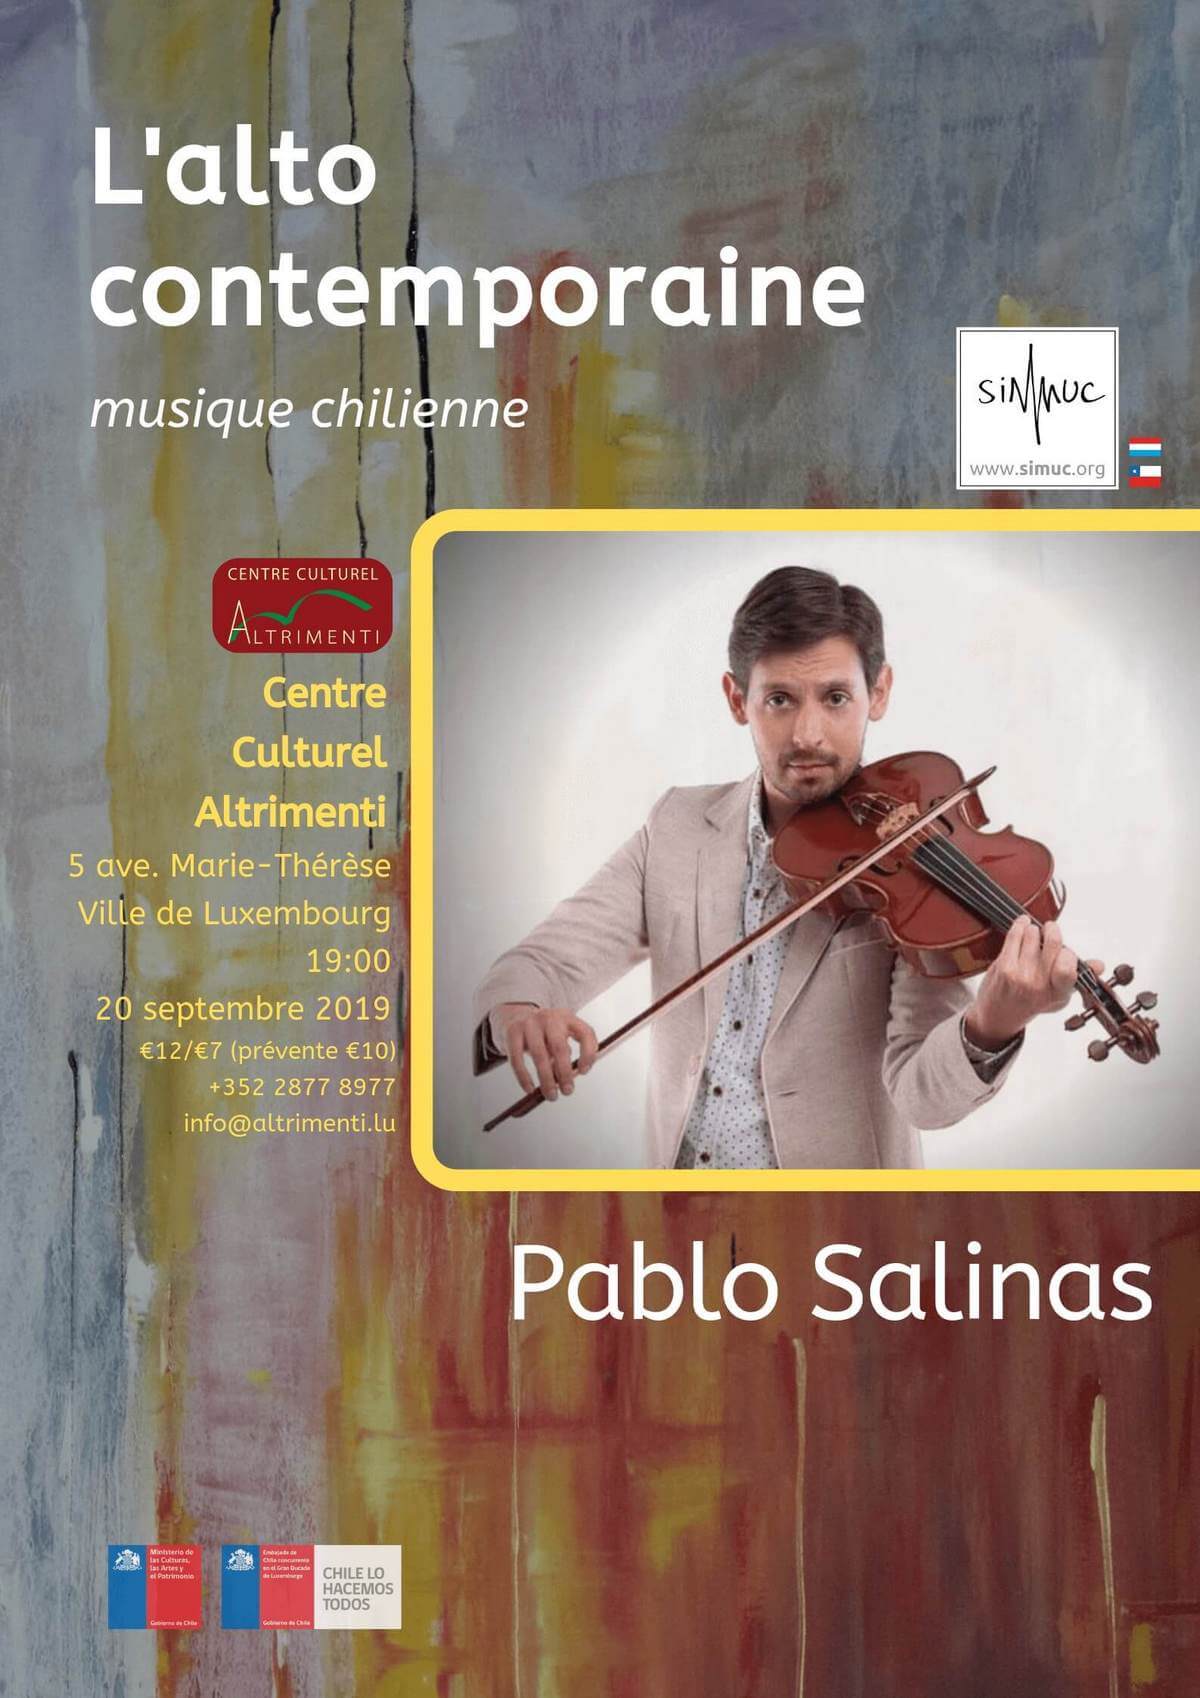 Contemporary Viola. Chilean Music in Luxembourg